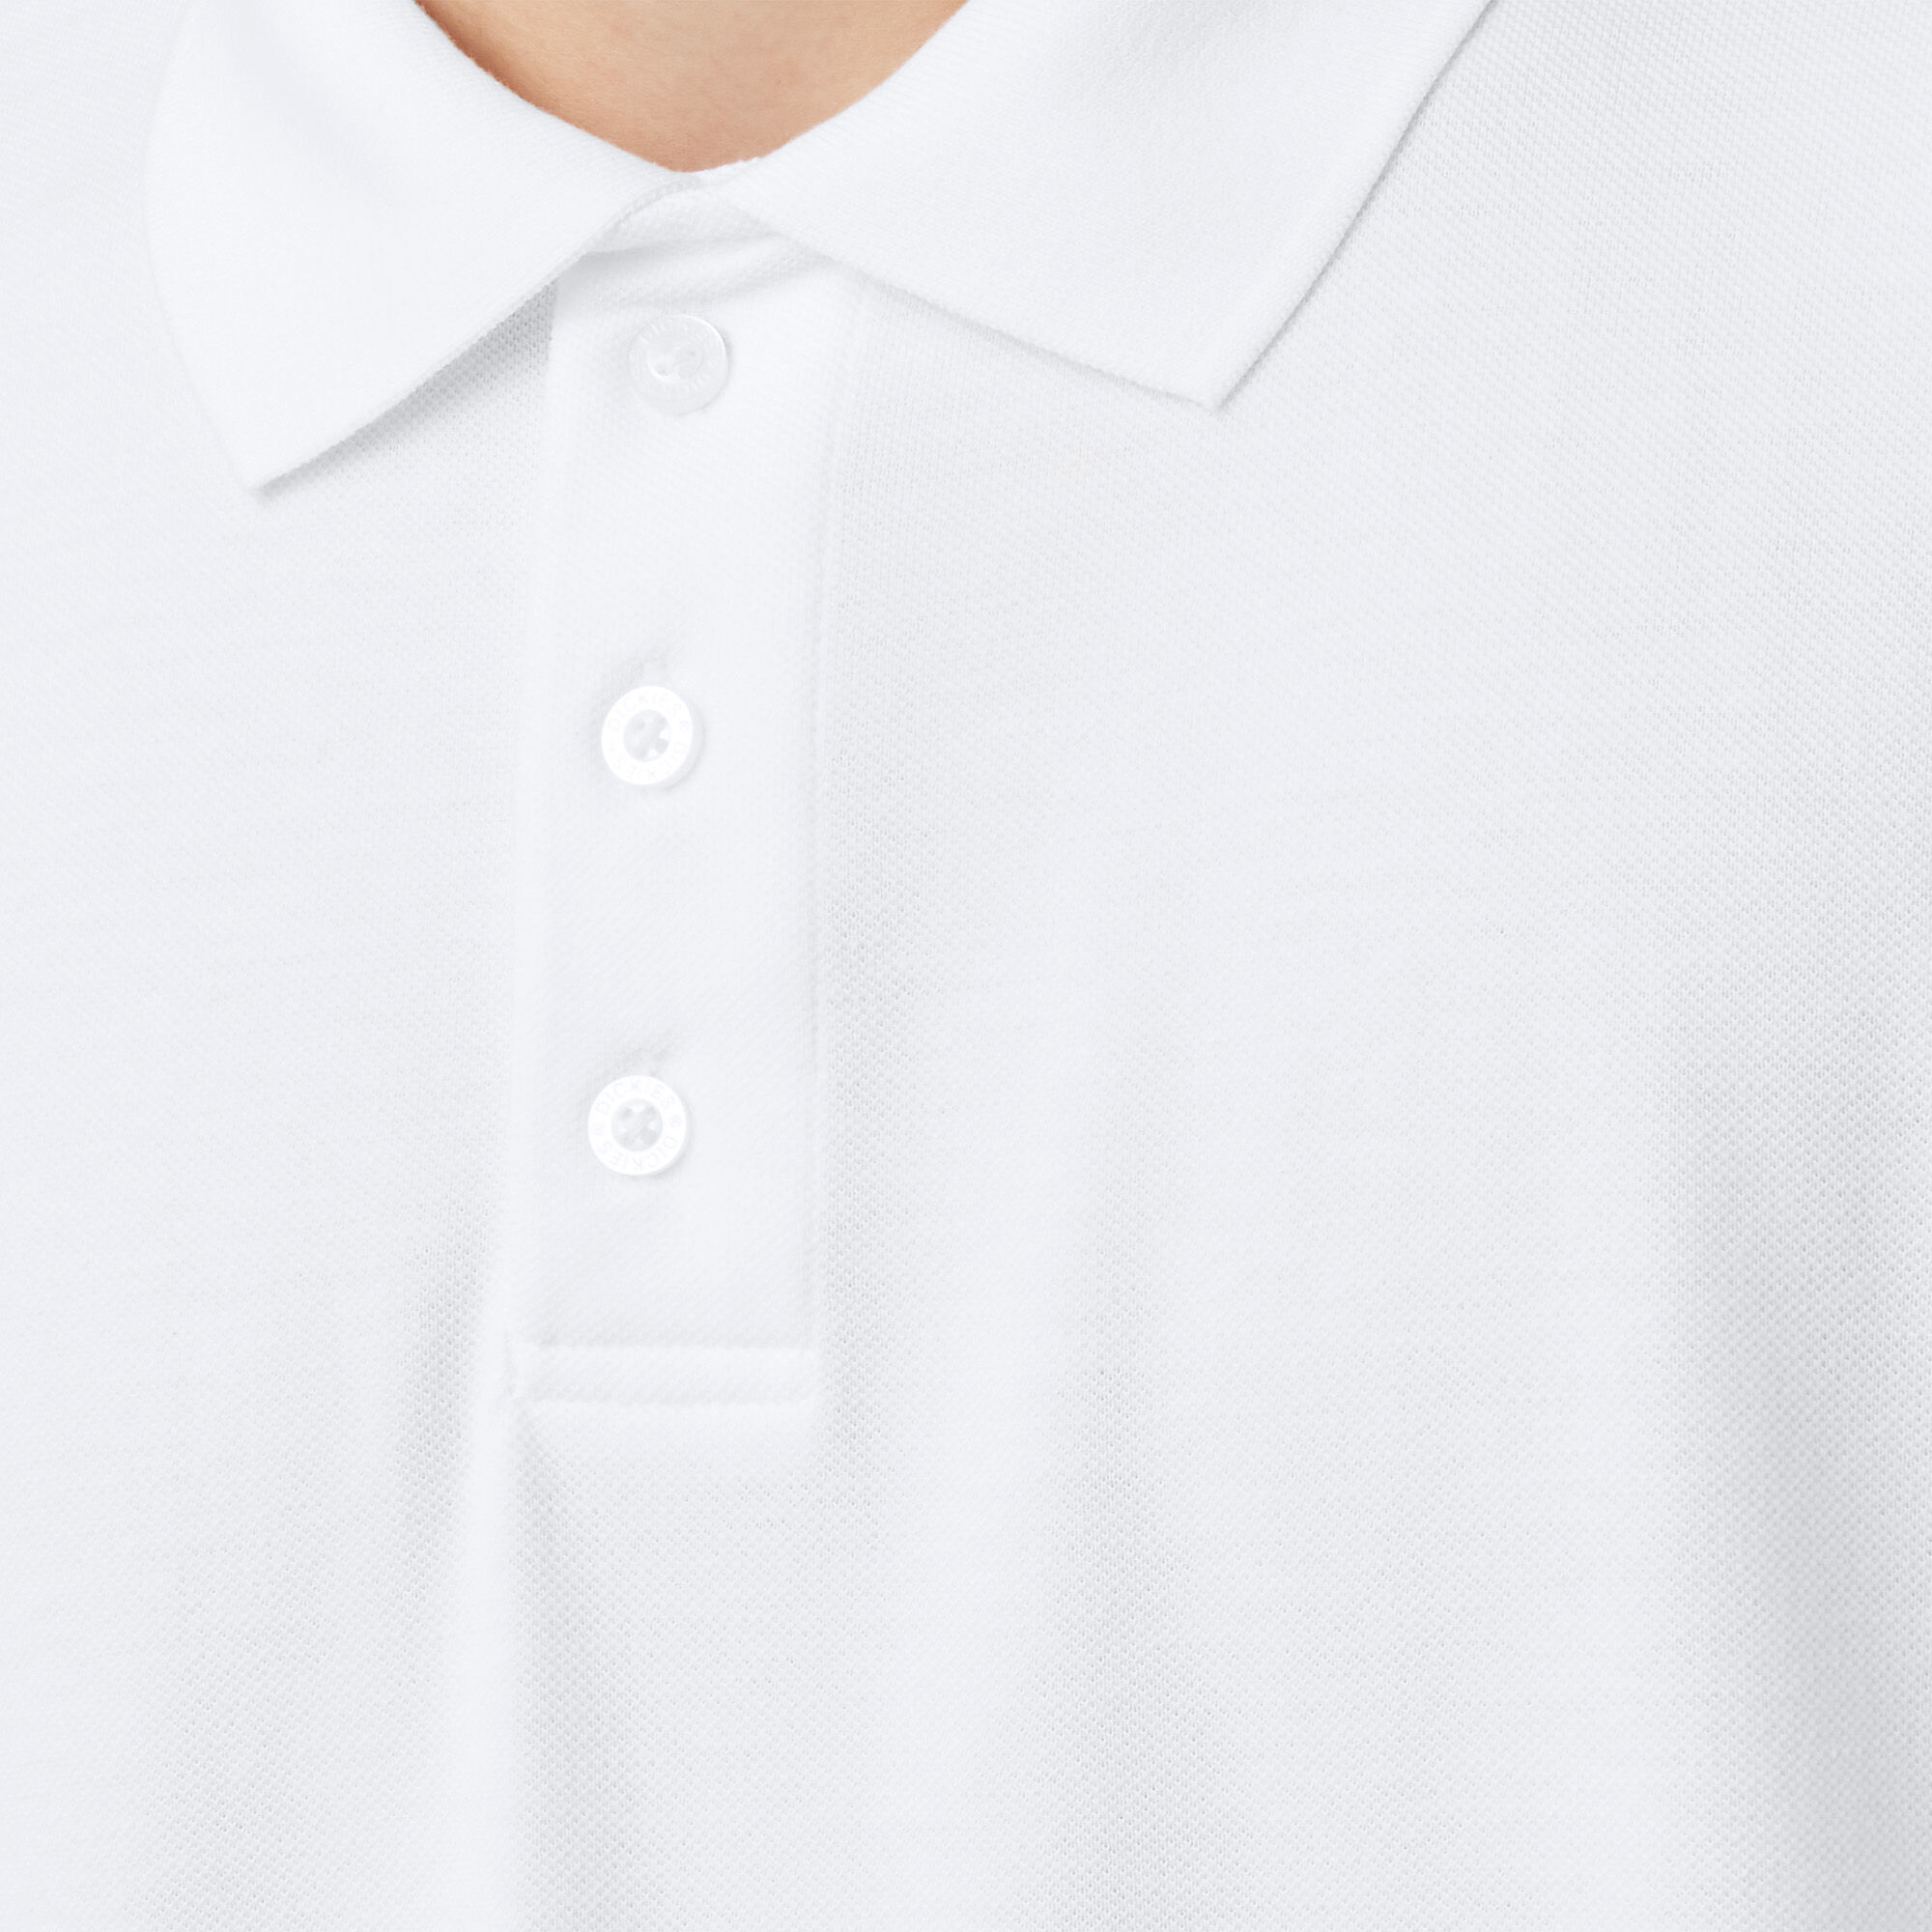 Dickies Adult Short Sleeve Pique Polo Shirt